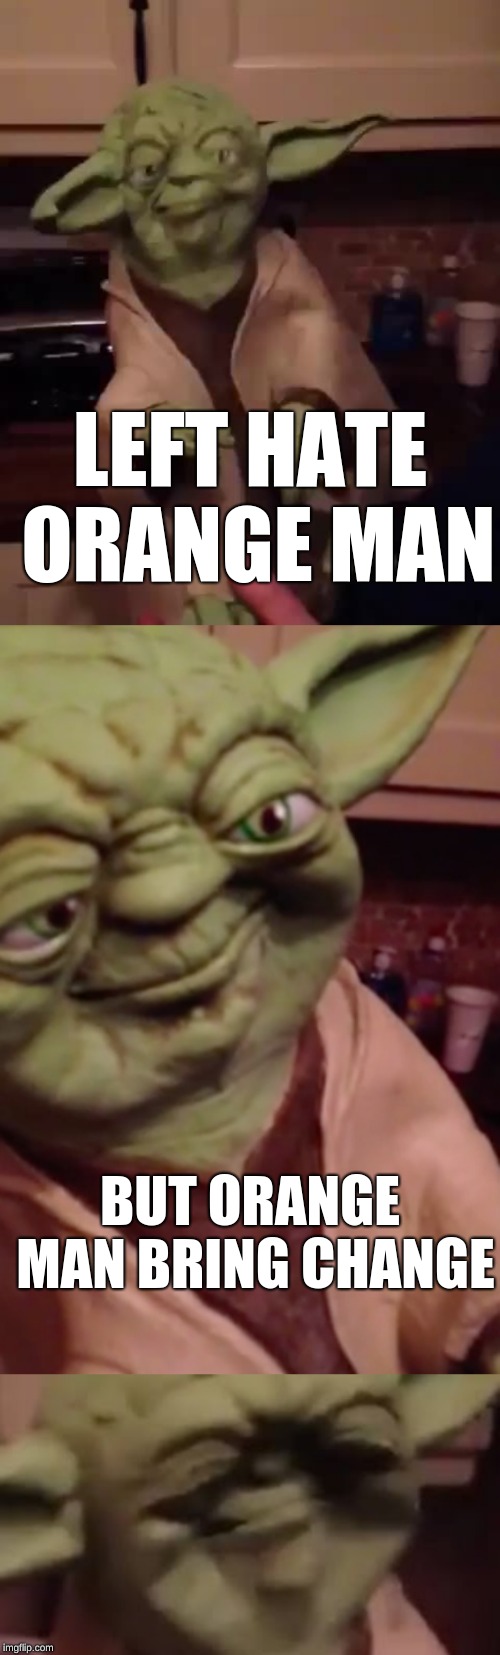 Yoda likes orange man he does,
Yoda likes leftists he does not | LEFT HATE ORANGE MAN; BUT ORANGE MAN BRING CHANGE | image tagged in yoda bad joke,politics,memes,donald trump,left wing | made w/ Imgflip meme maker